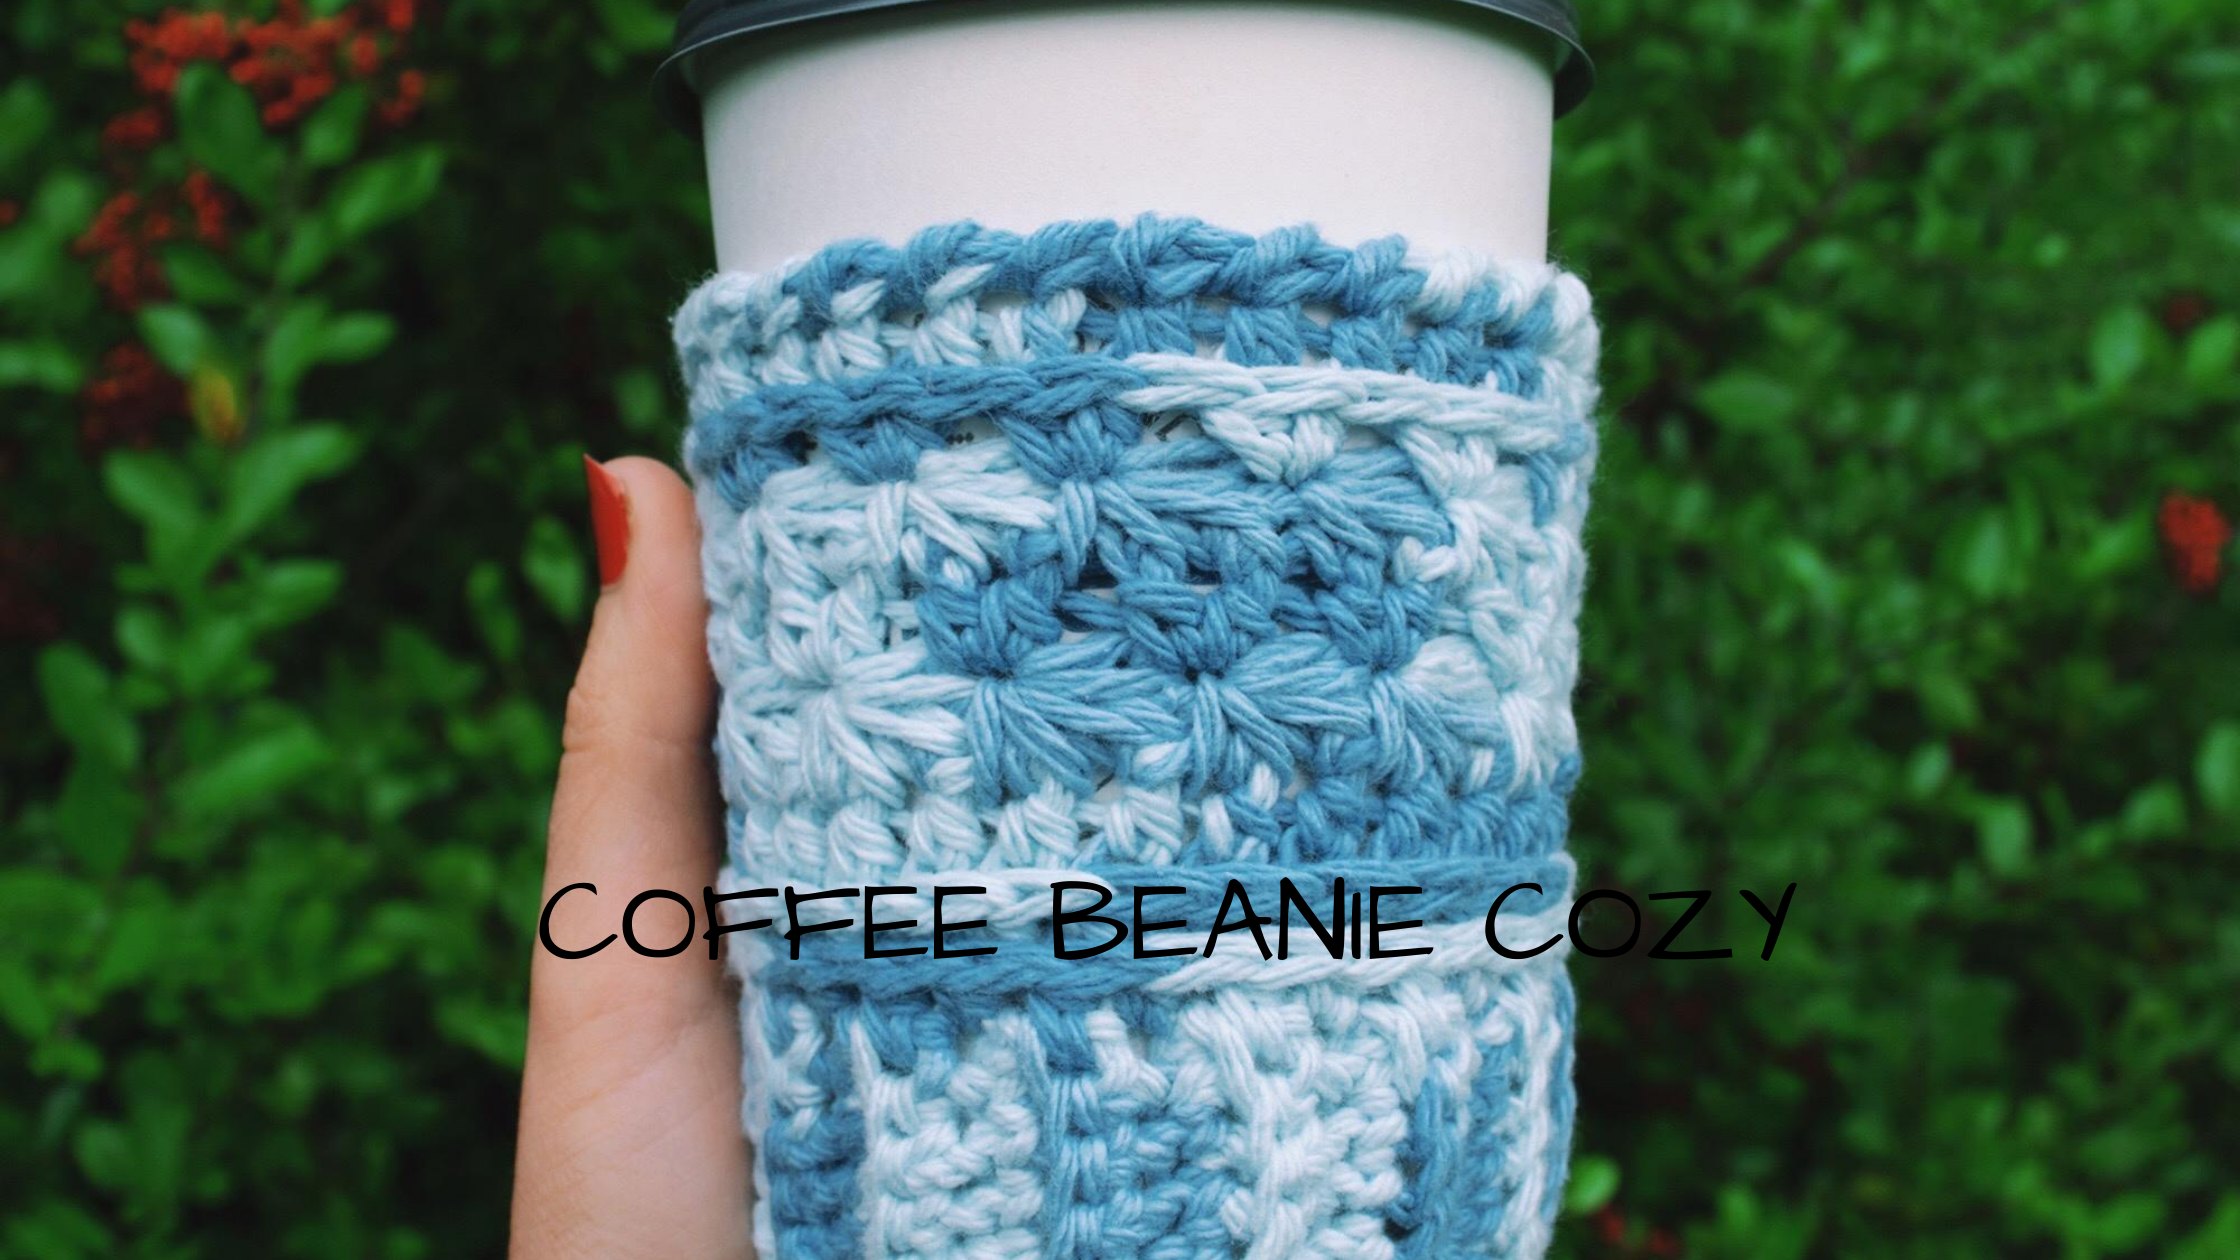 Coffee Beanie Cozy (TM) Crochet Patterns!